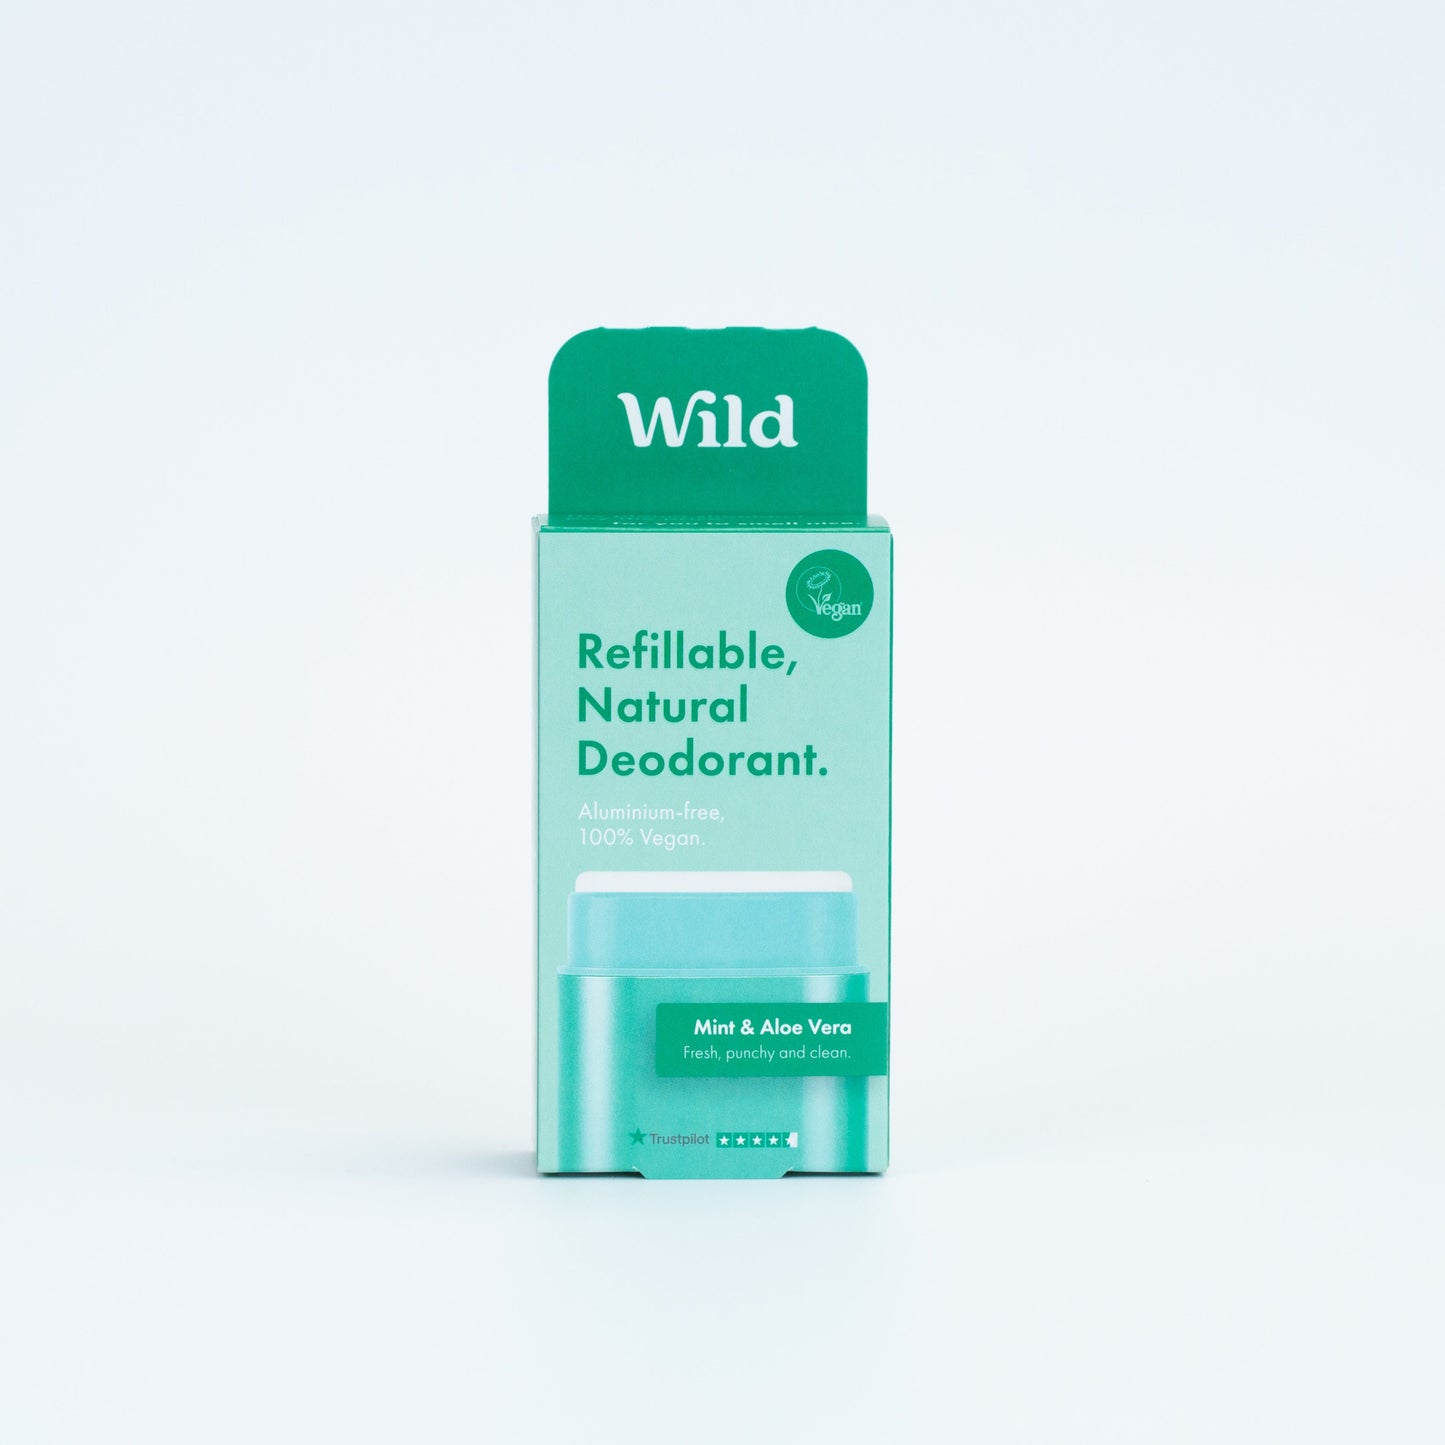 Wild Men's Aqua Case and Mint & Aloe Vera Deodorant Refill